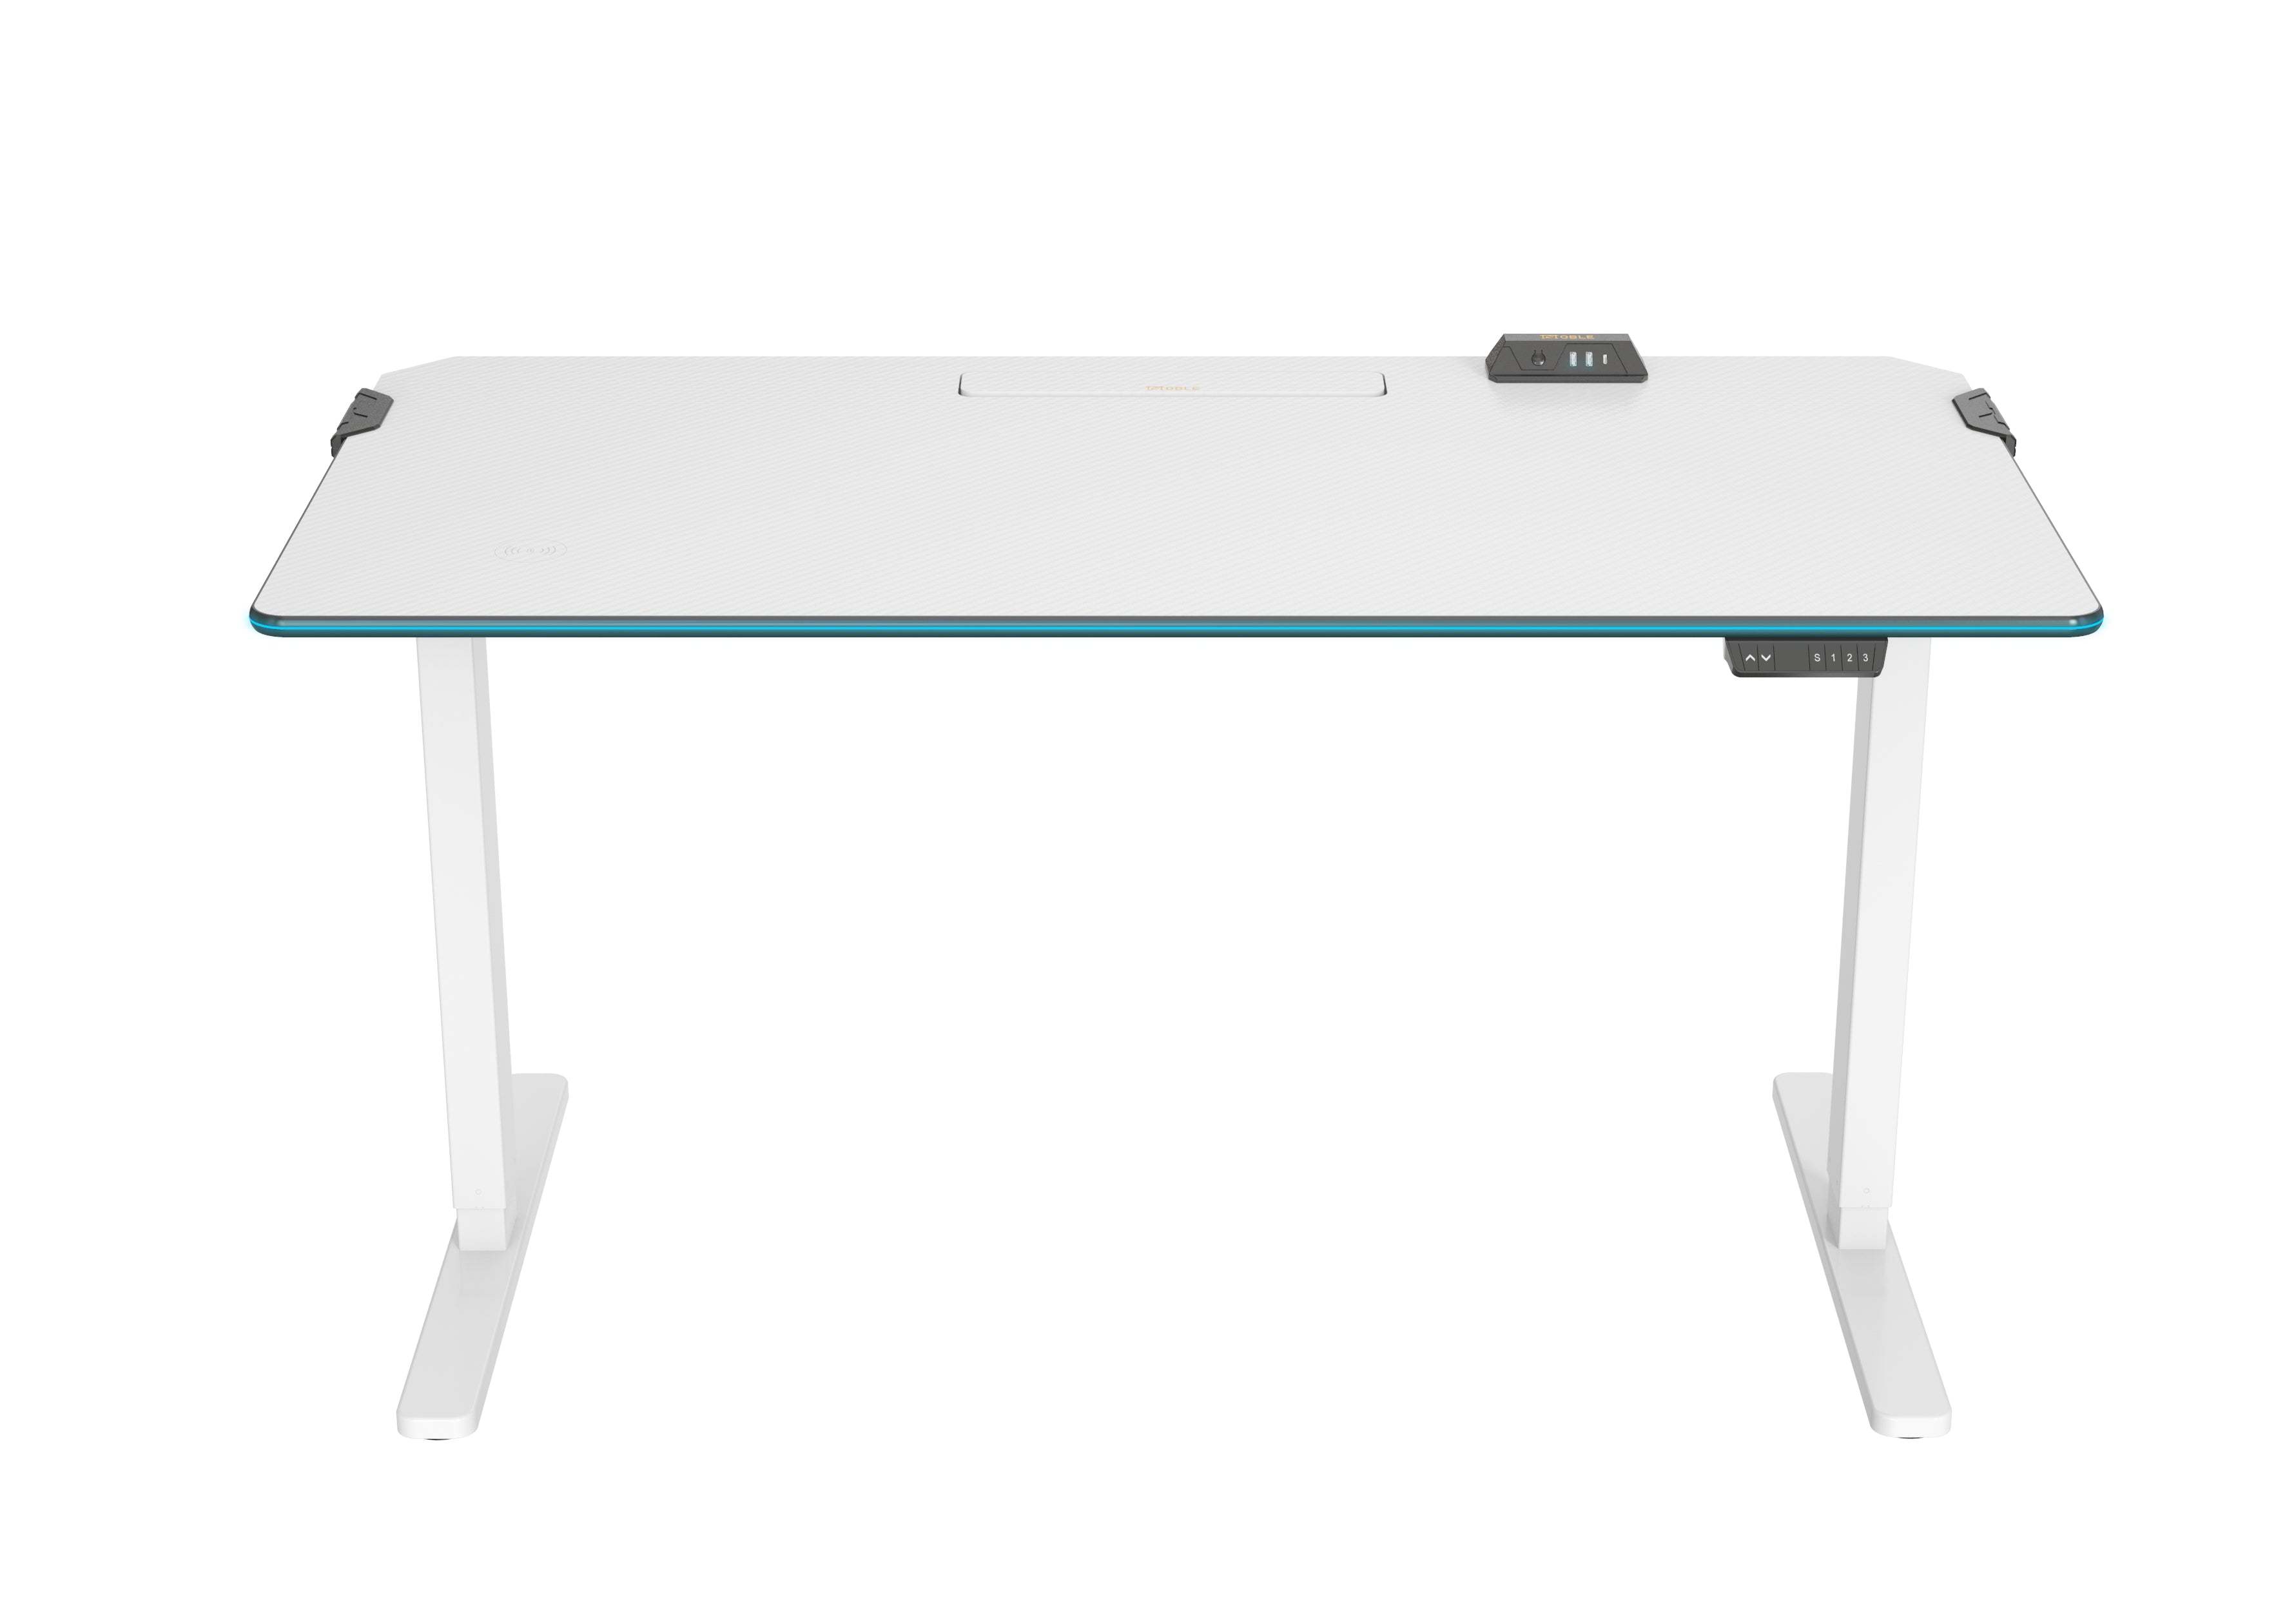 Noble Desk Duke Series - ARGB Table Top